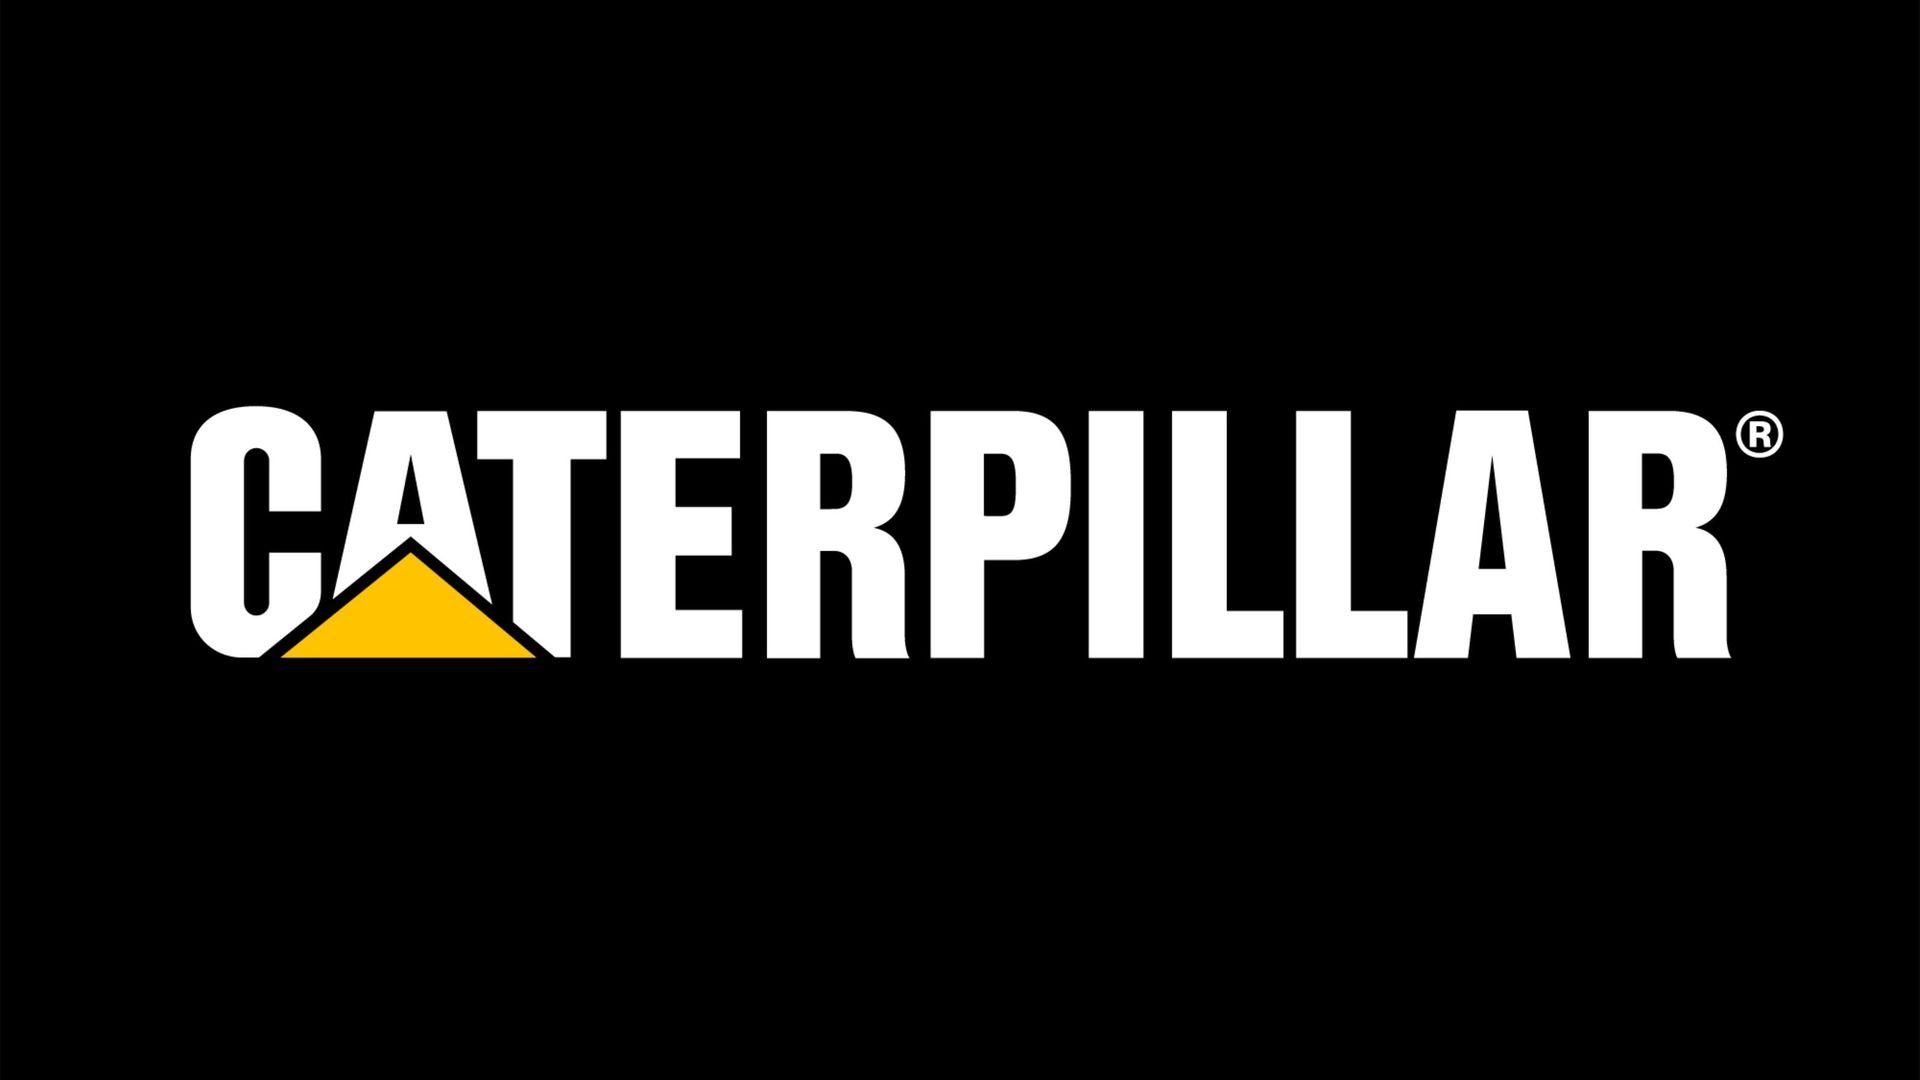 Black Caterpillar Logo - Caterpillar Brand Logo and Black Background Wallpaper